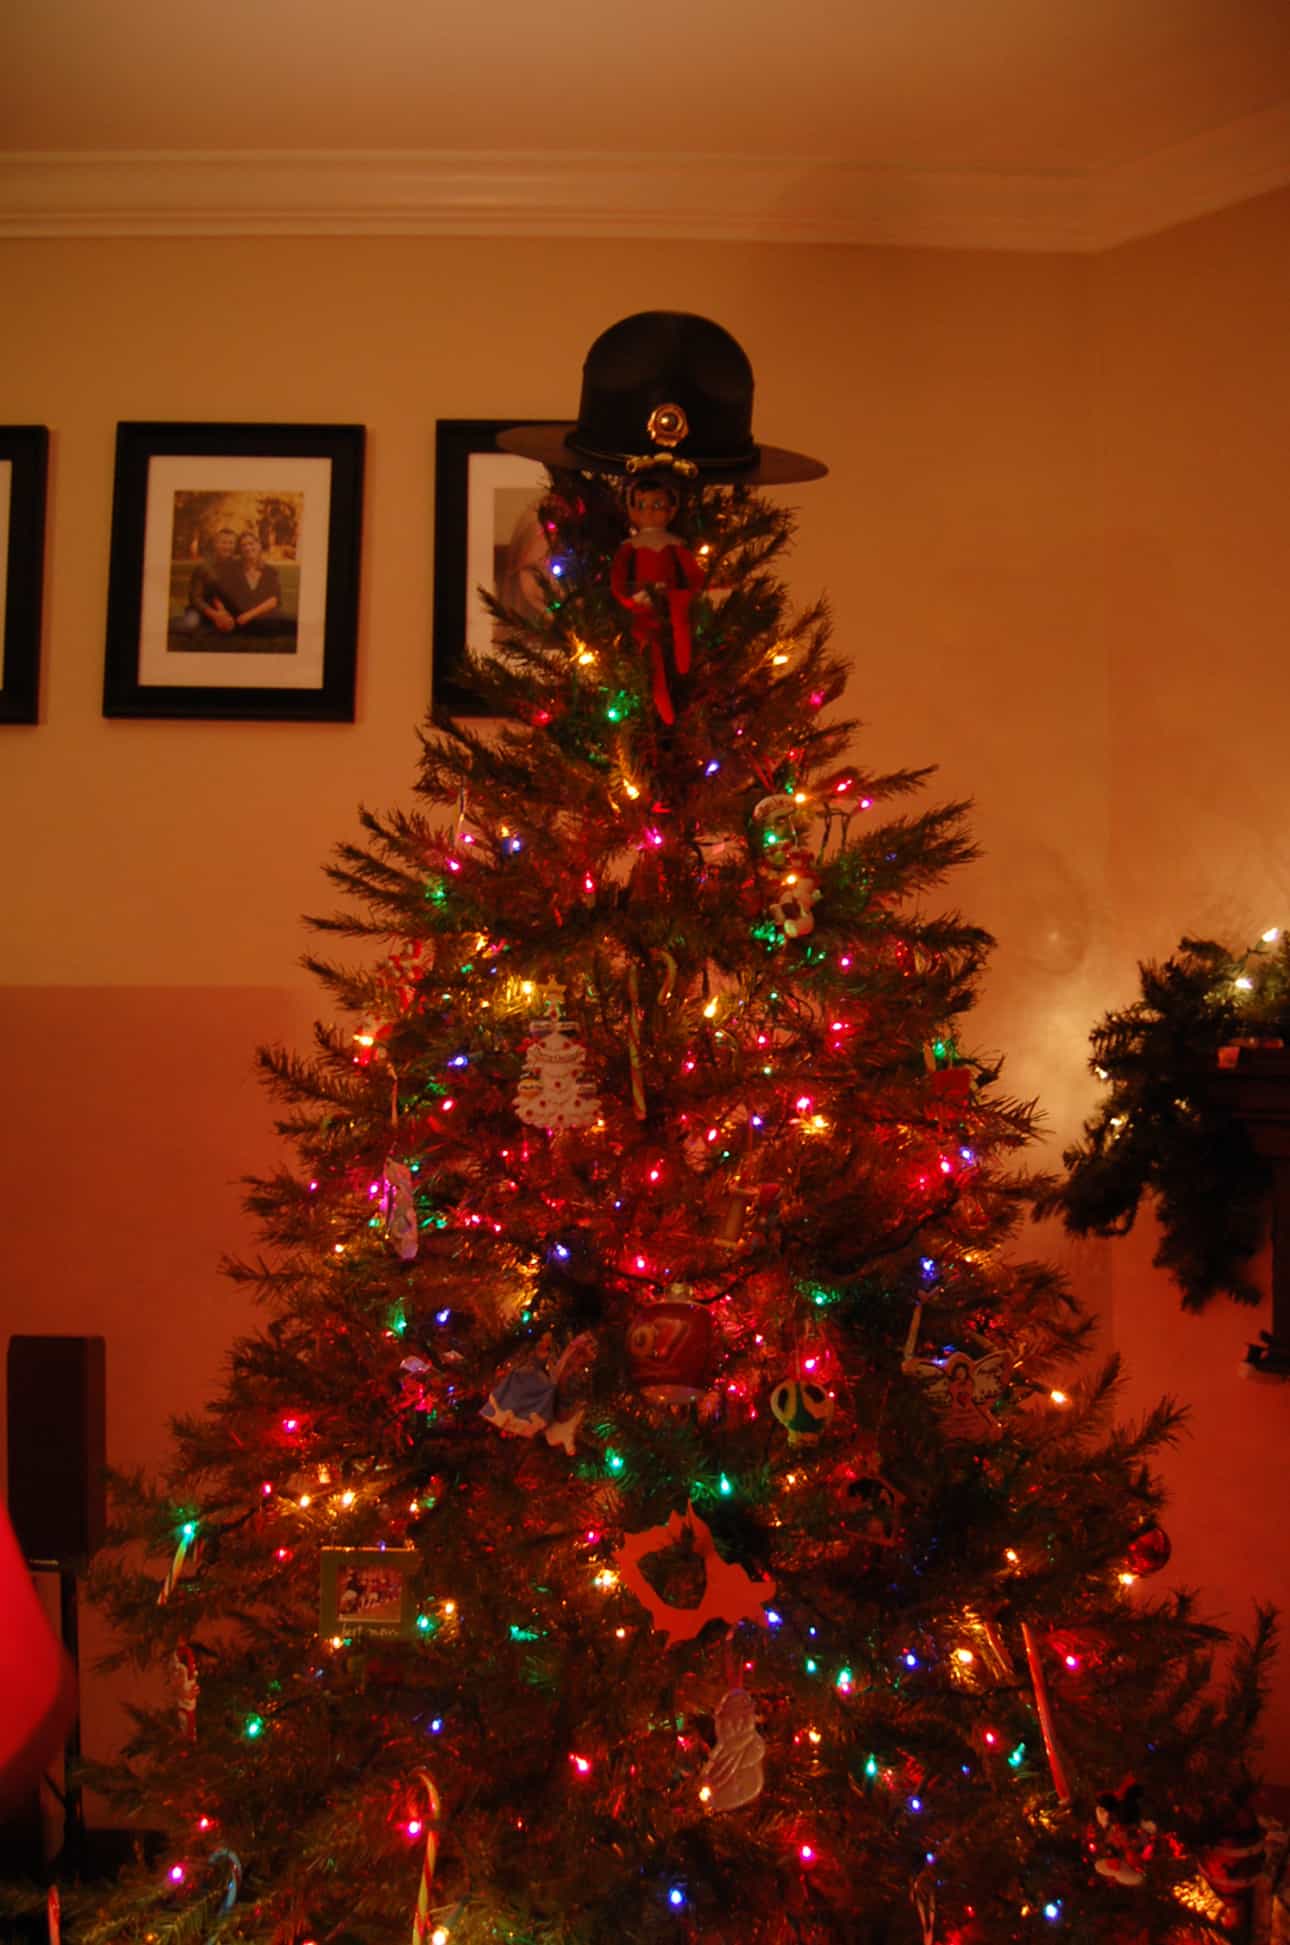 100. Elfie sitting atop the Christmas Tree